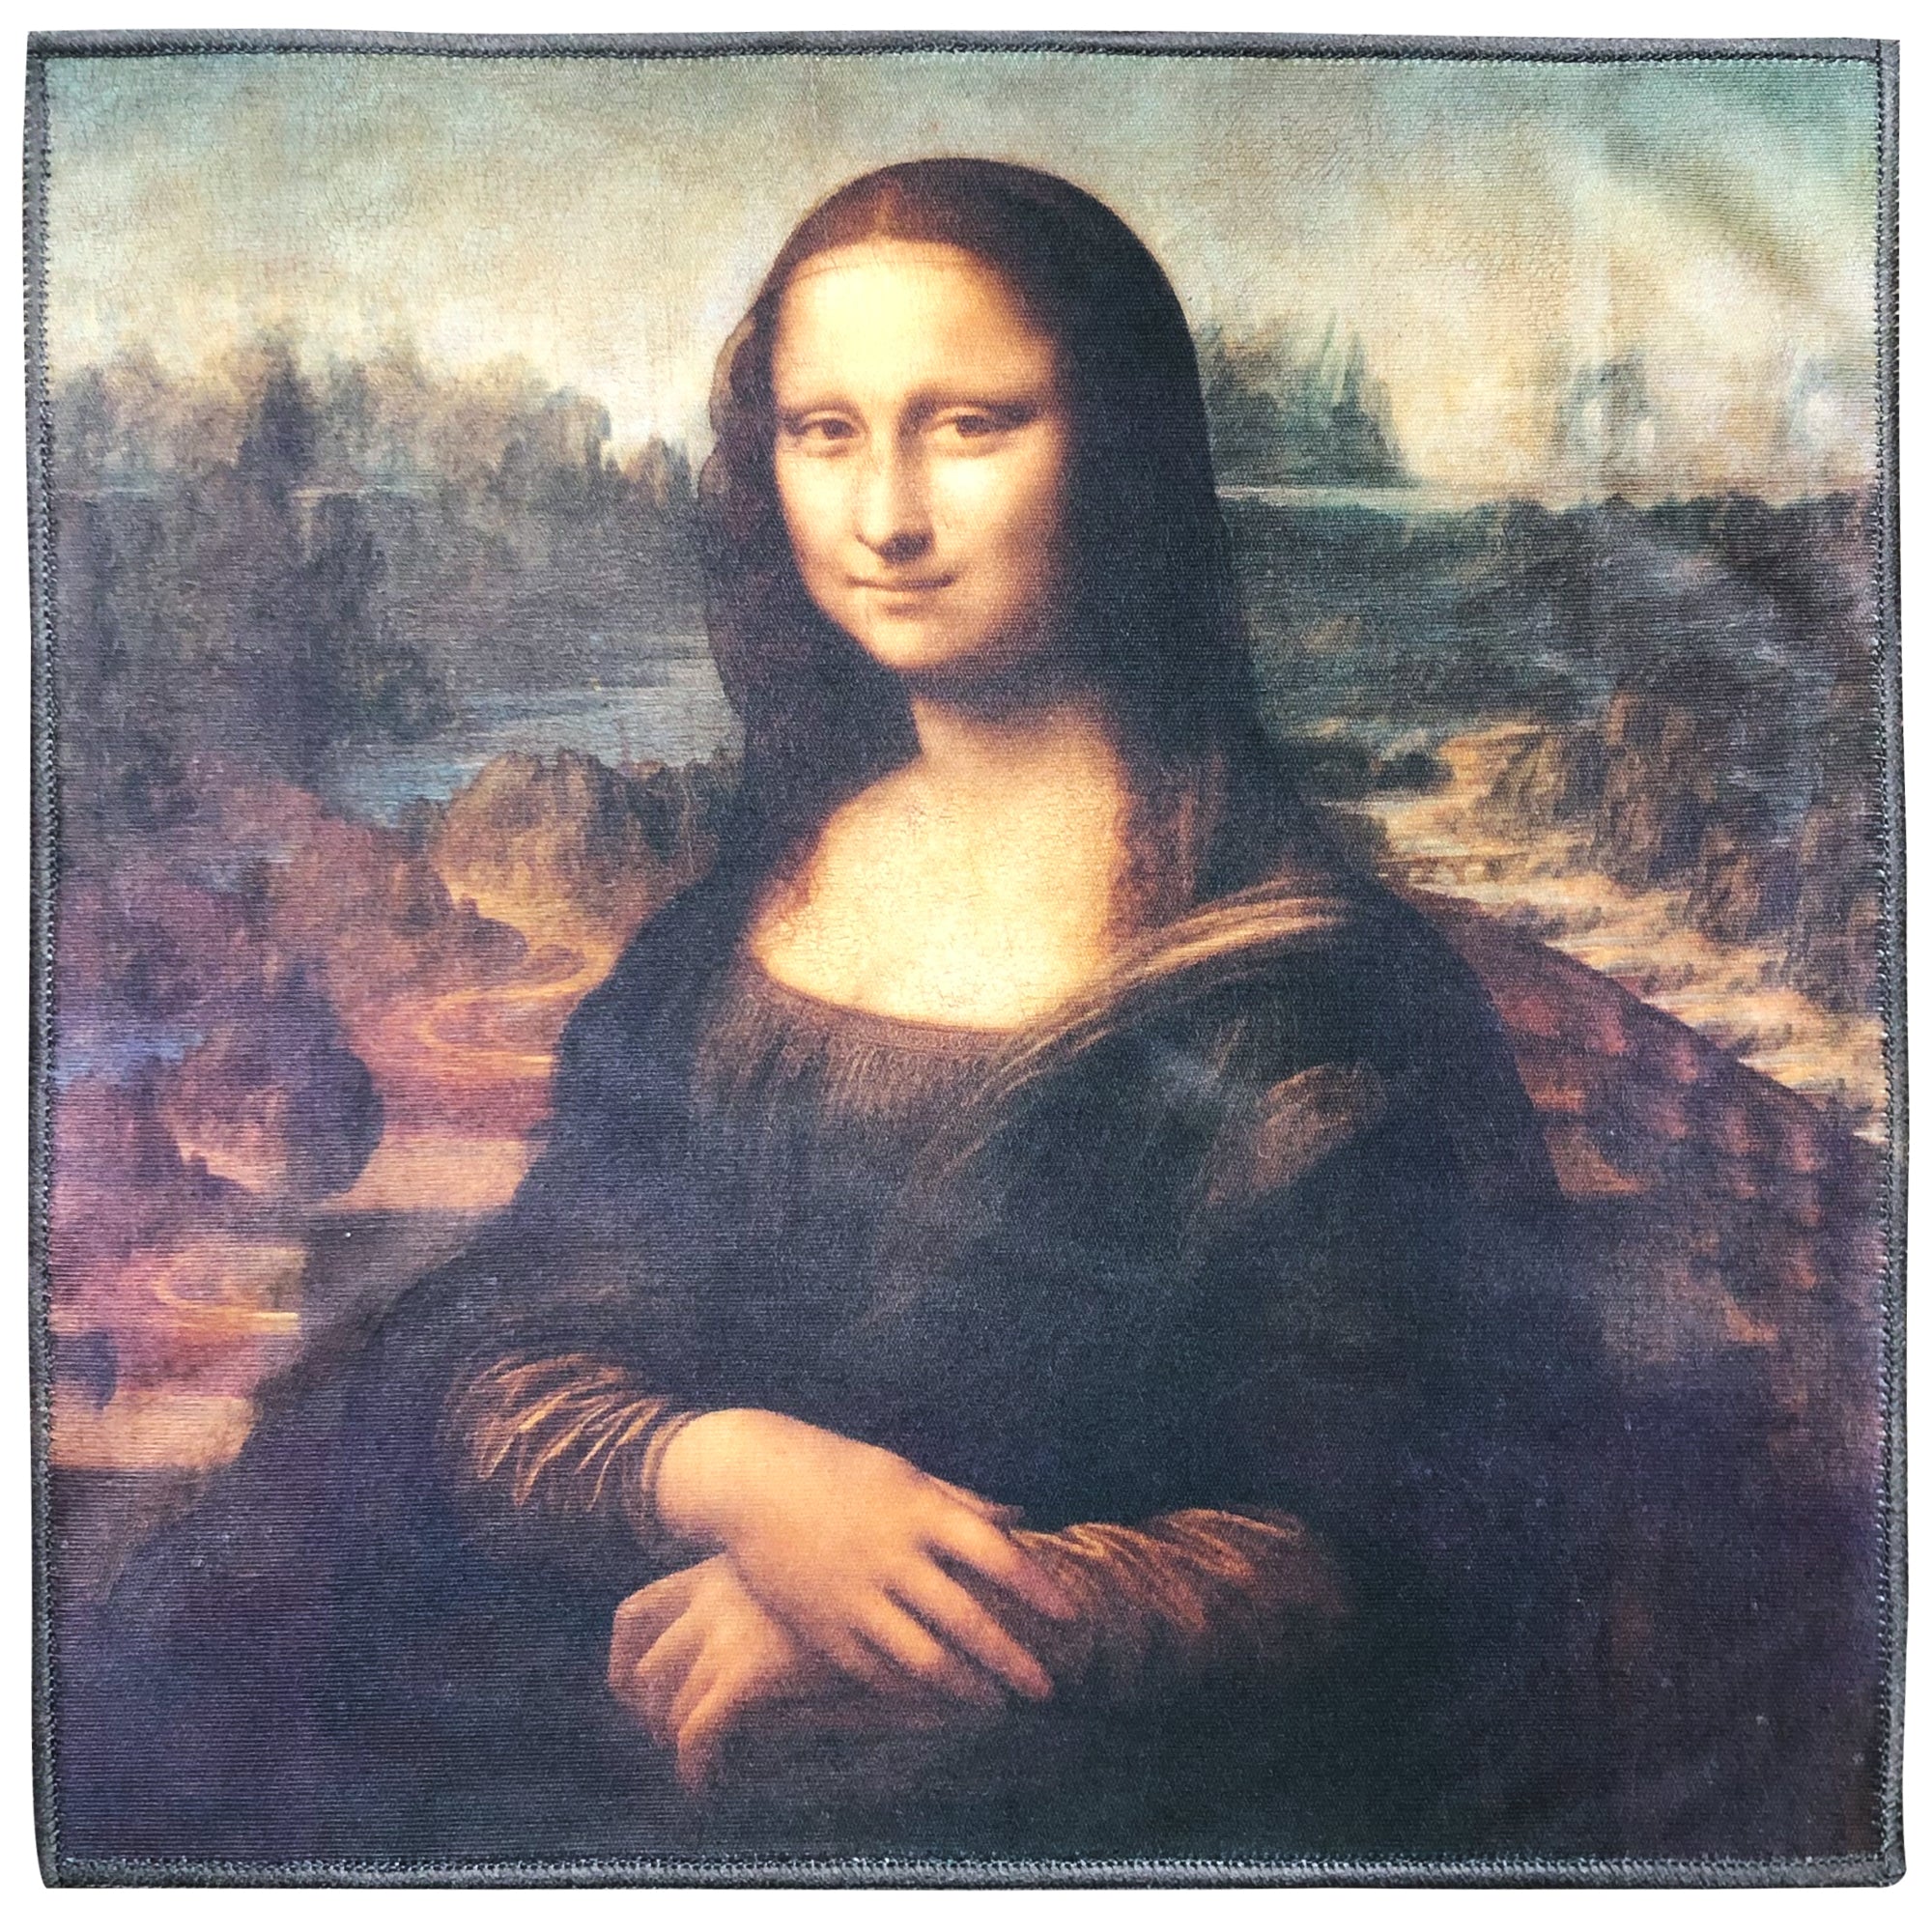 [6 Pack] Leonardo da Vinci "Mona Lisa" - Art Collection - Ultra Premium Quality Microfiber Cleaning Cloths